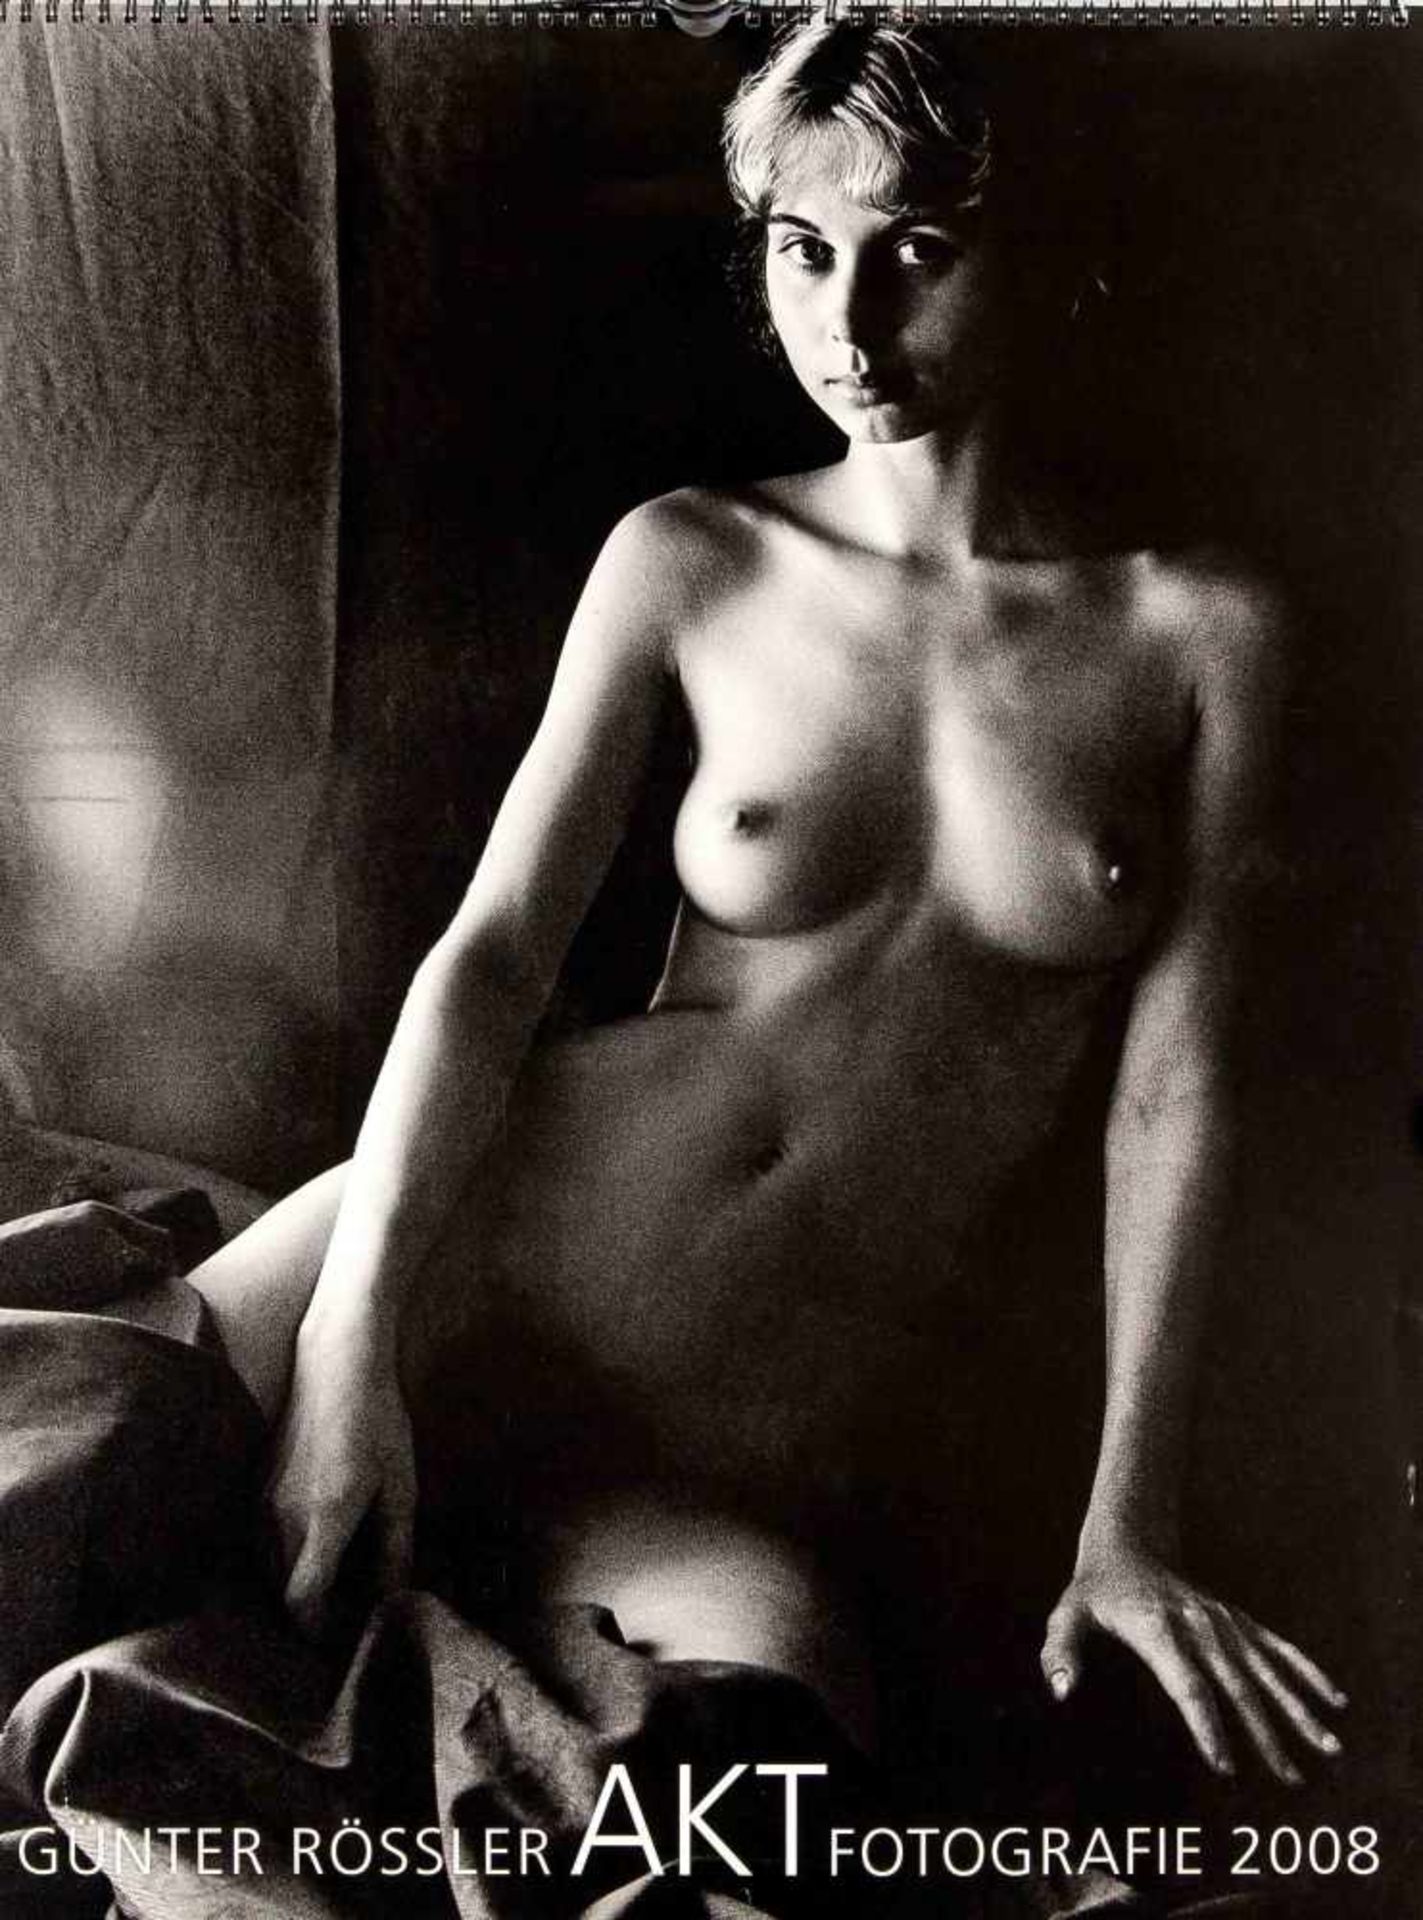 Erotic --- Günter Rössler (1926-2012), German photographer and one of the pioneers ofartistic nude